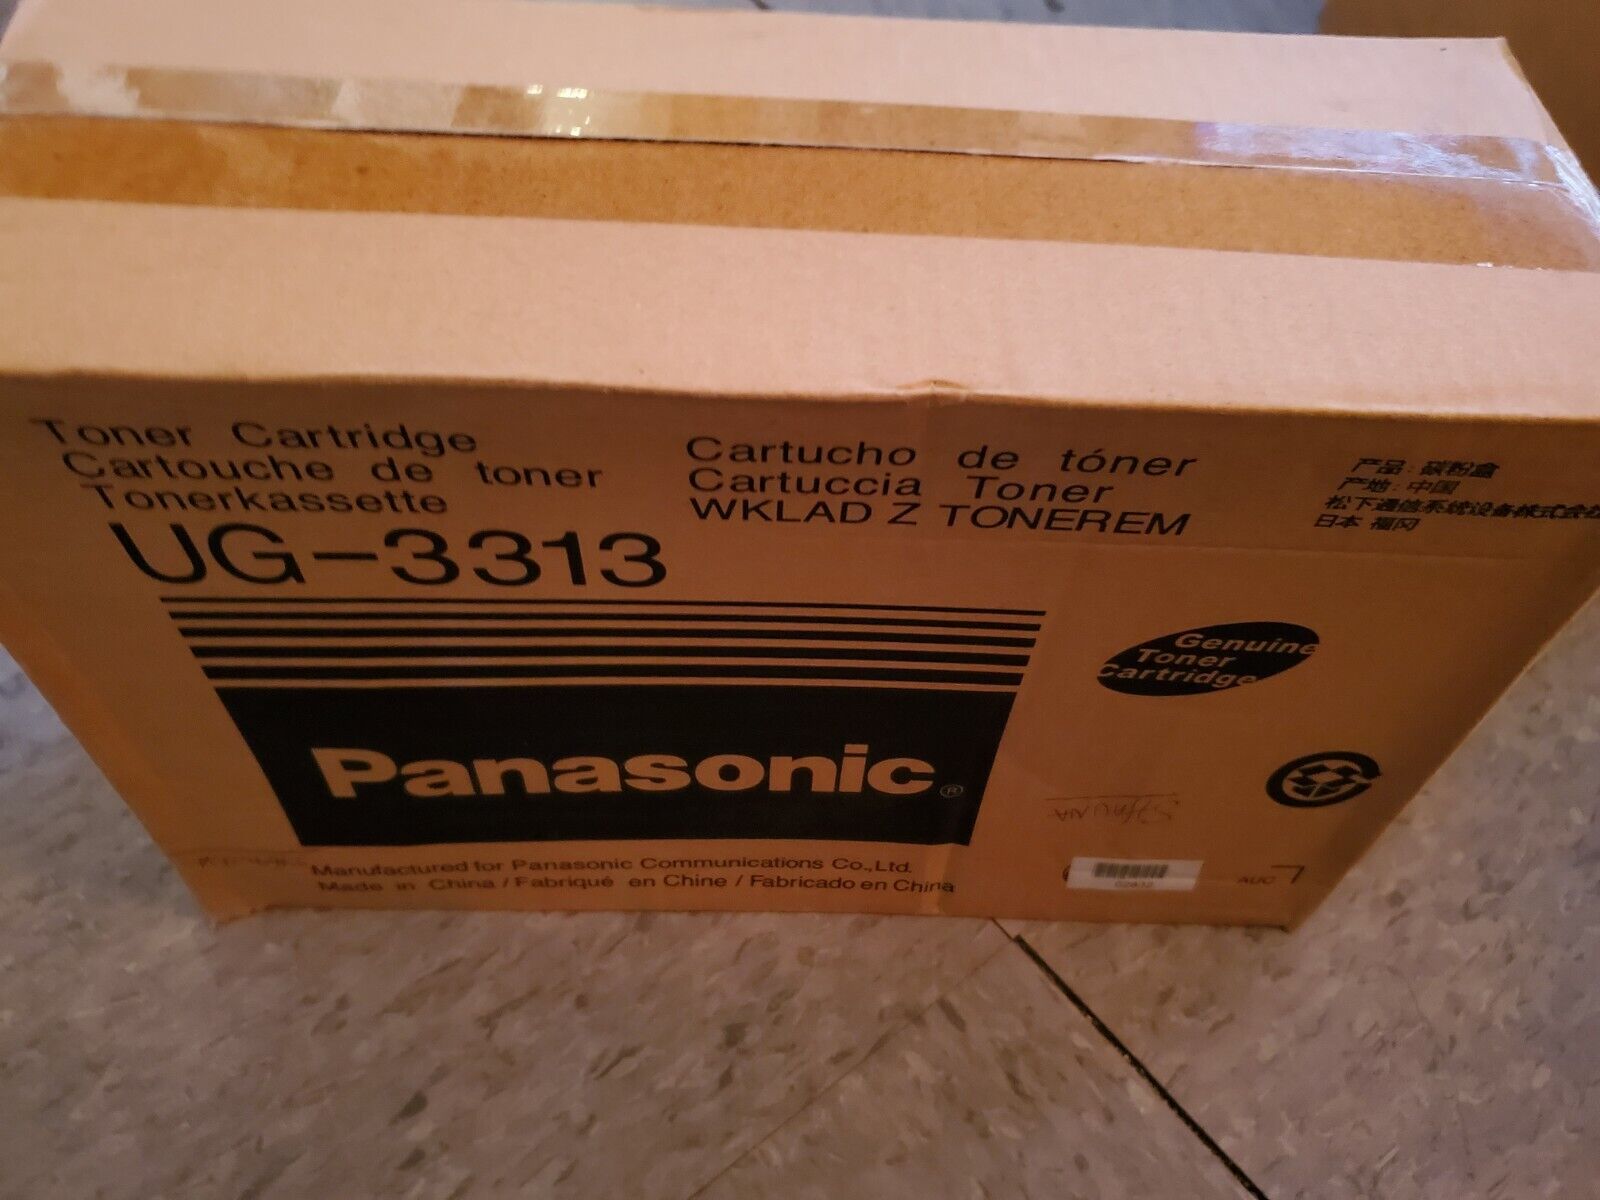 Panasonic UG-3313 Black Print Toner Cartridge for Fax Models Panafax uf550